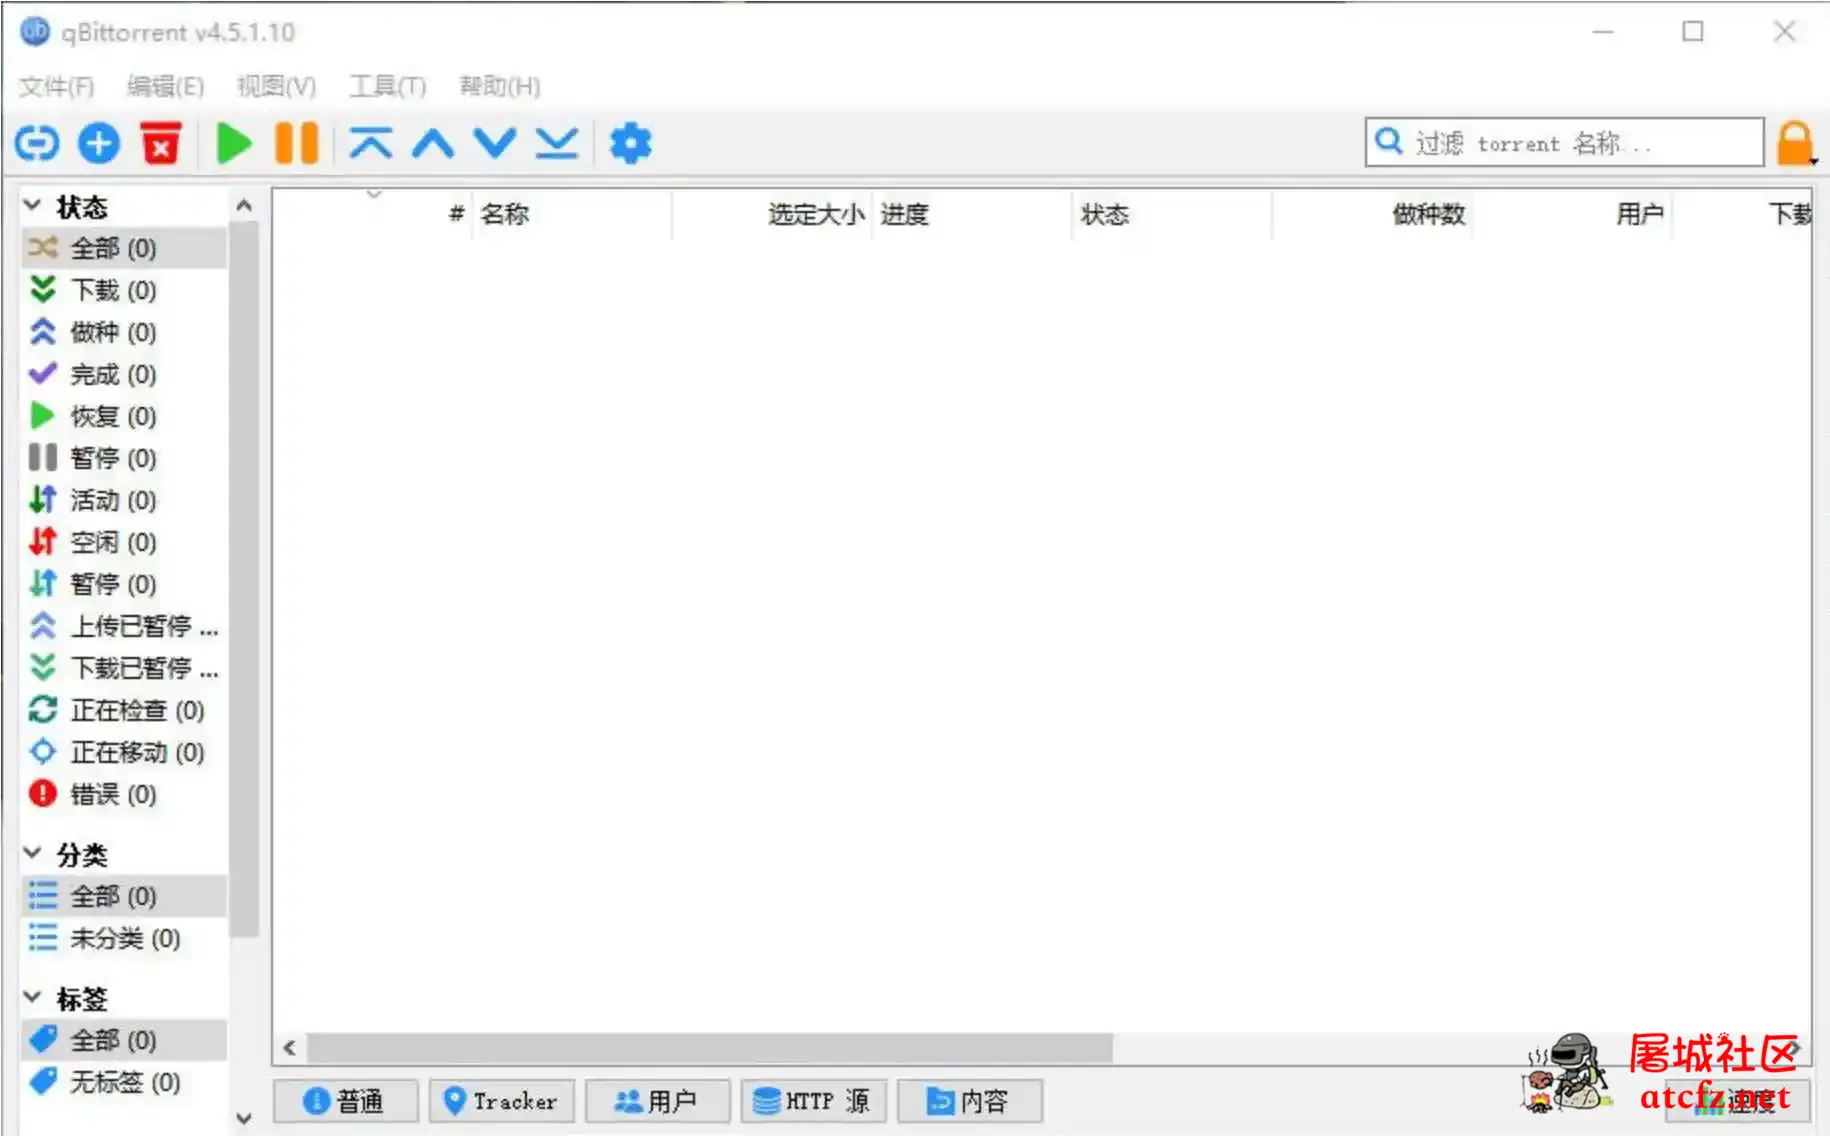 qBittorrent v4.5.3.10增强便携版BT种子下载工具 屠城辅助网www.tcfz1.com1202